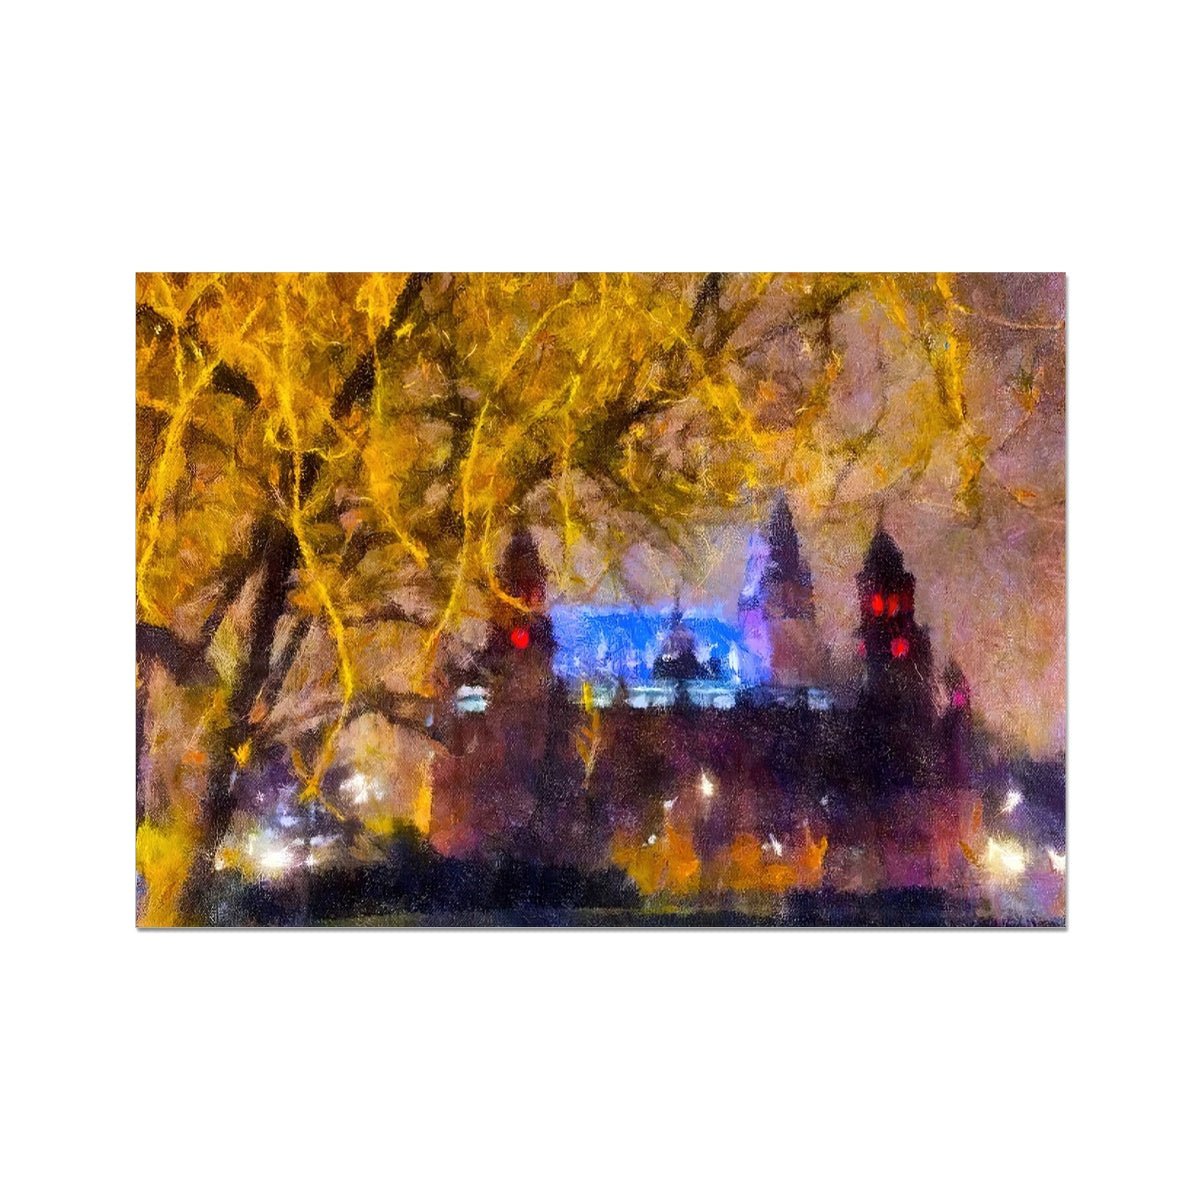 Kelvingrove Nights Painting | Fine Art Prints From Scotland-Unframed Prints-Edinburgh & Glasgow Art Gallery-A2 Landscape-Paintings, Prints, Homeware, Art Gifts From Scotland By Scottish Artist Kevin Hunter